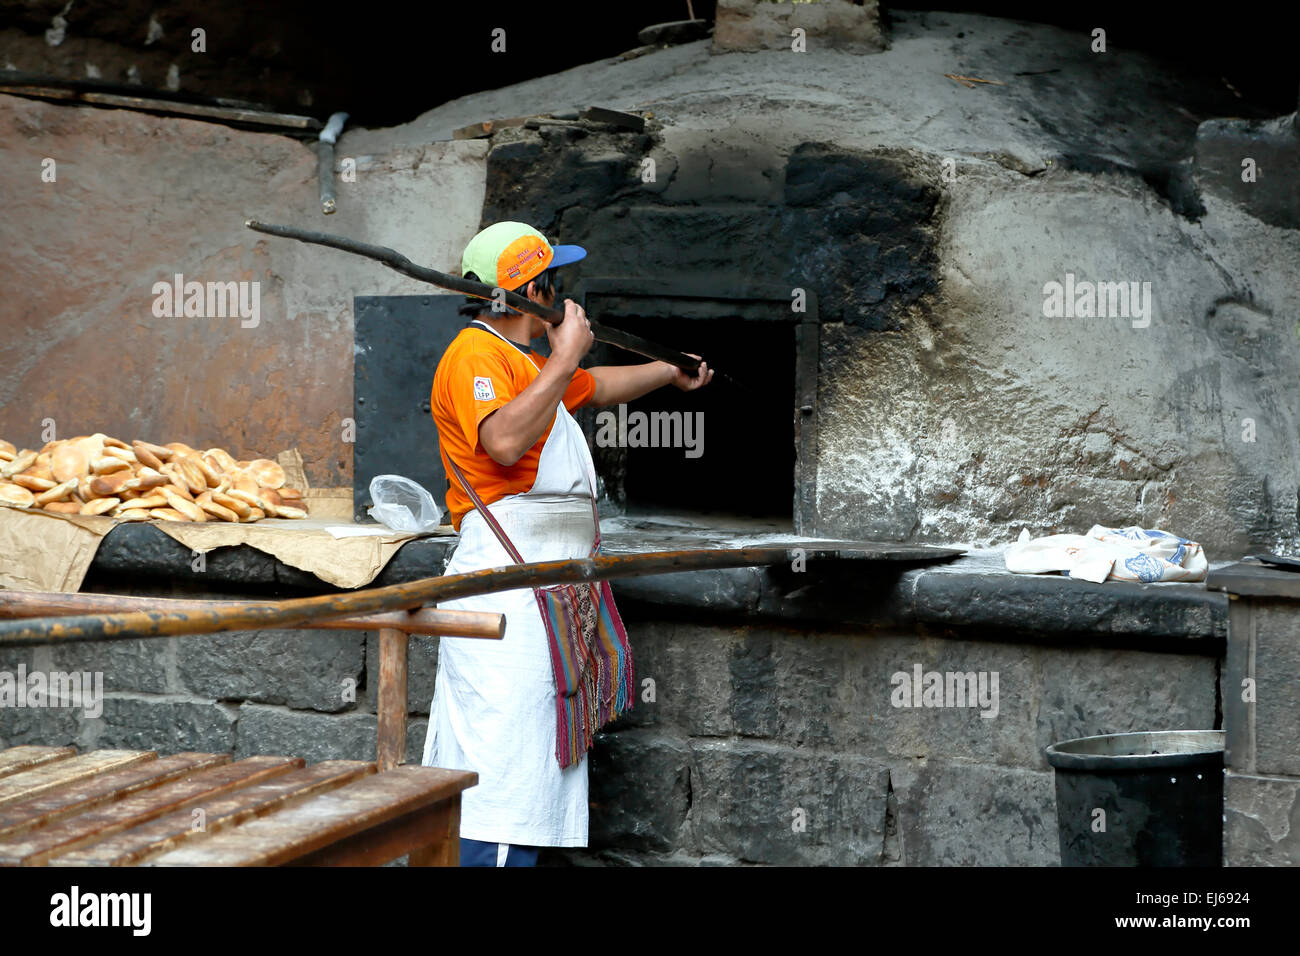 Baker making empanadas, historic Horno Colonial San Francisco (San Francisco Colonial Oven), Pisac, Cusco, Peru Stock Photo